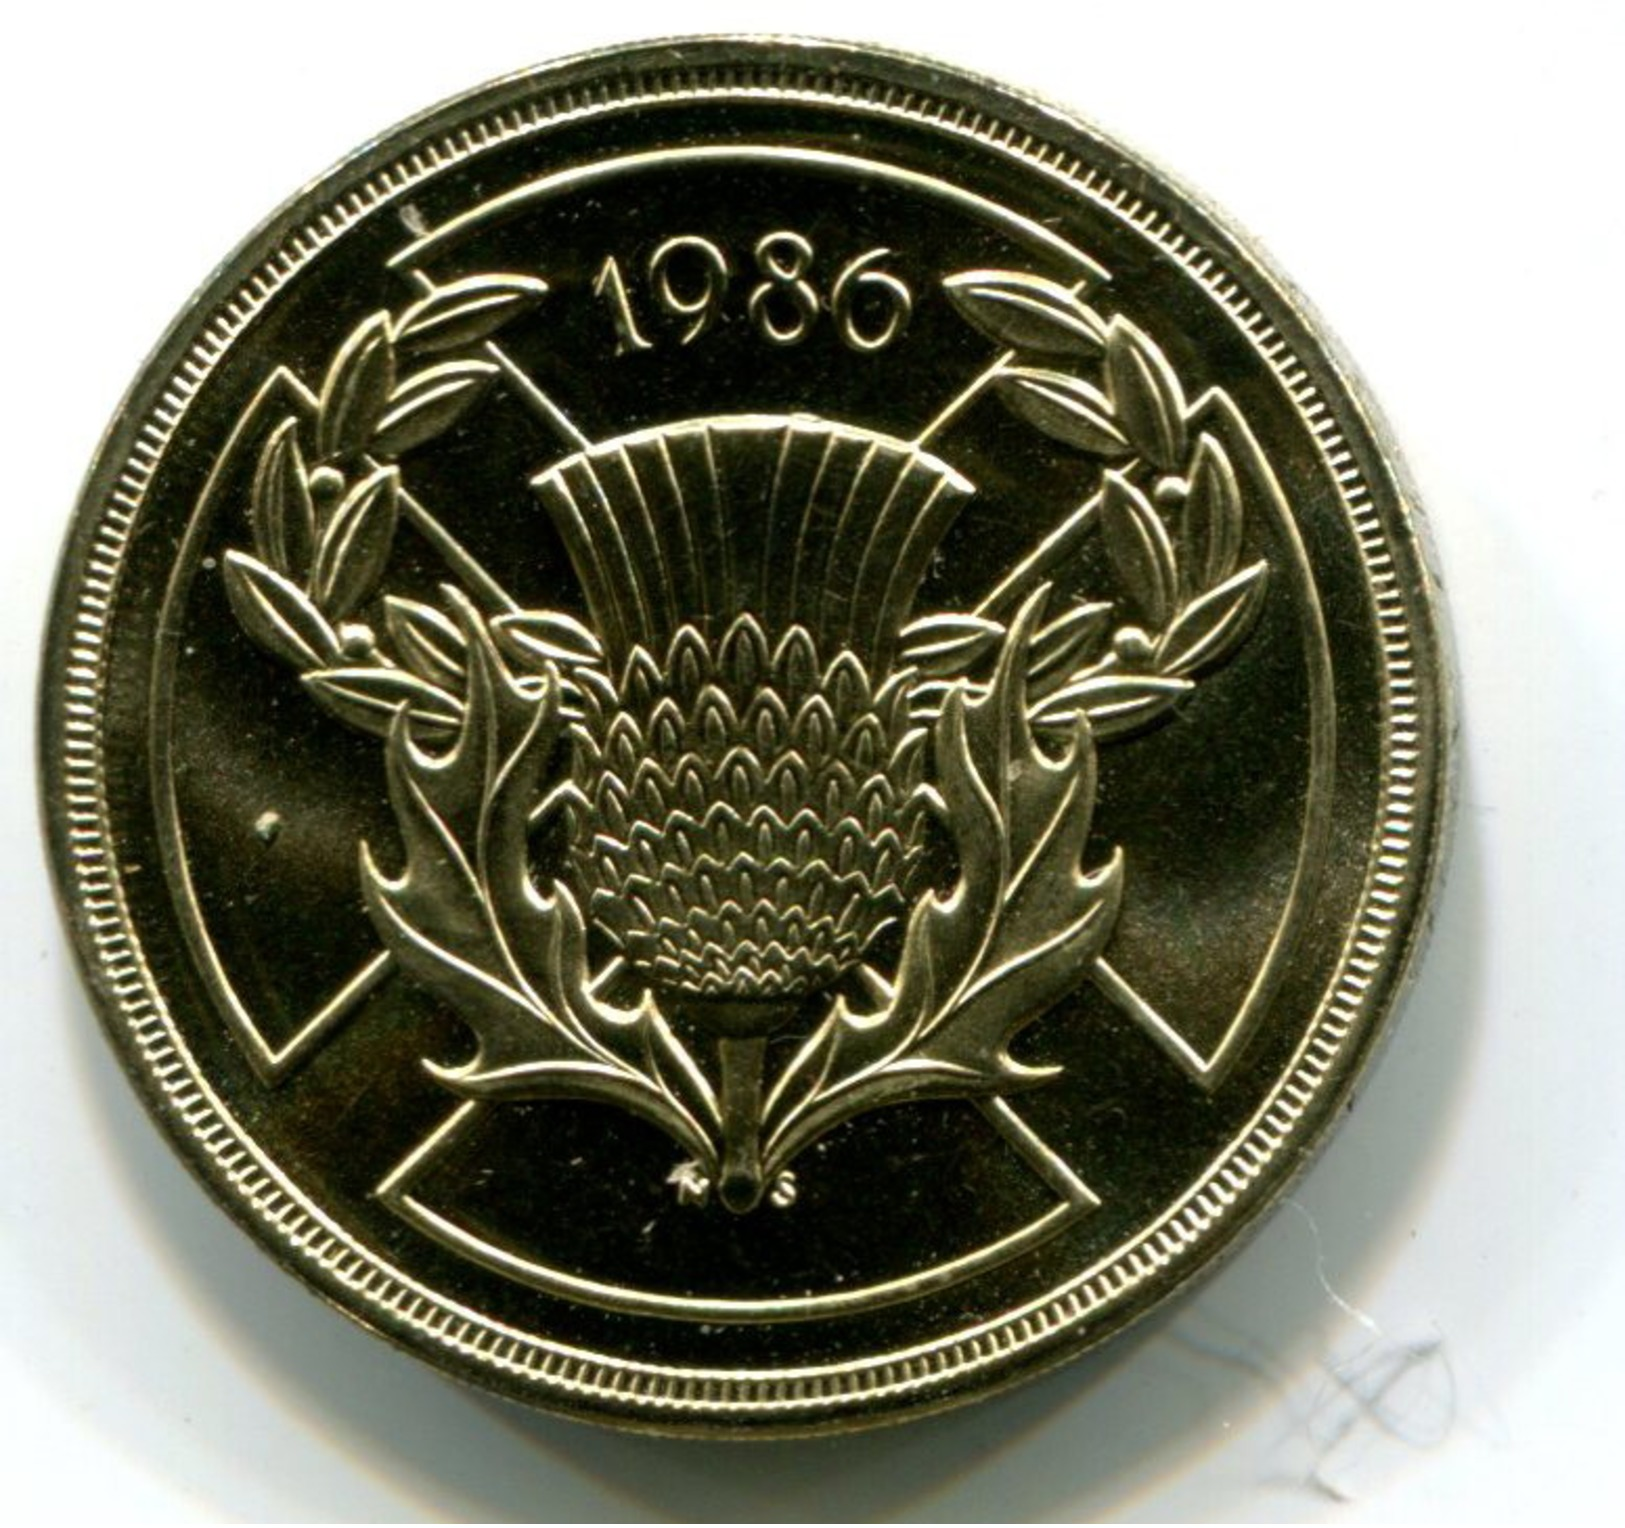 1986 Scotland Commemorative 2 Pound Coin - 2 Pounds